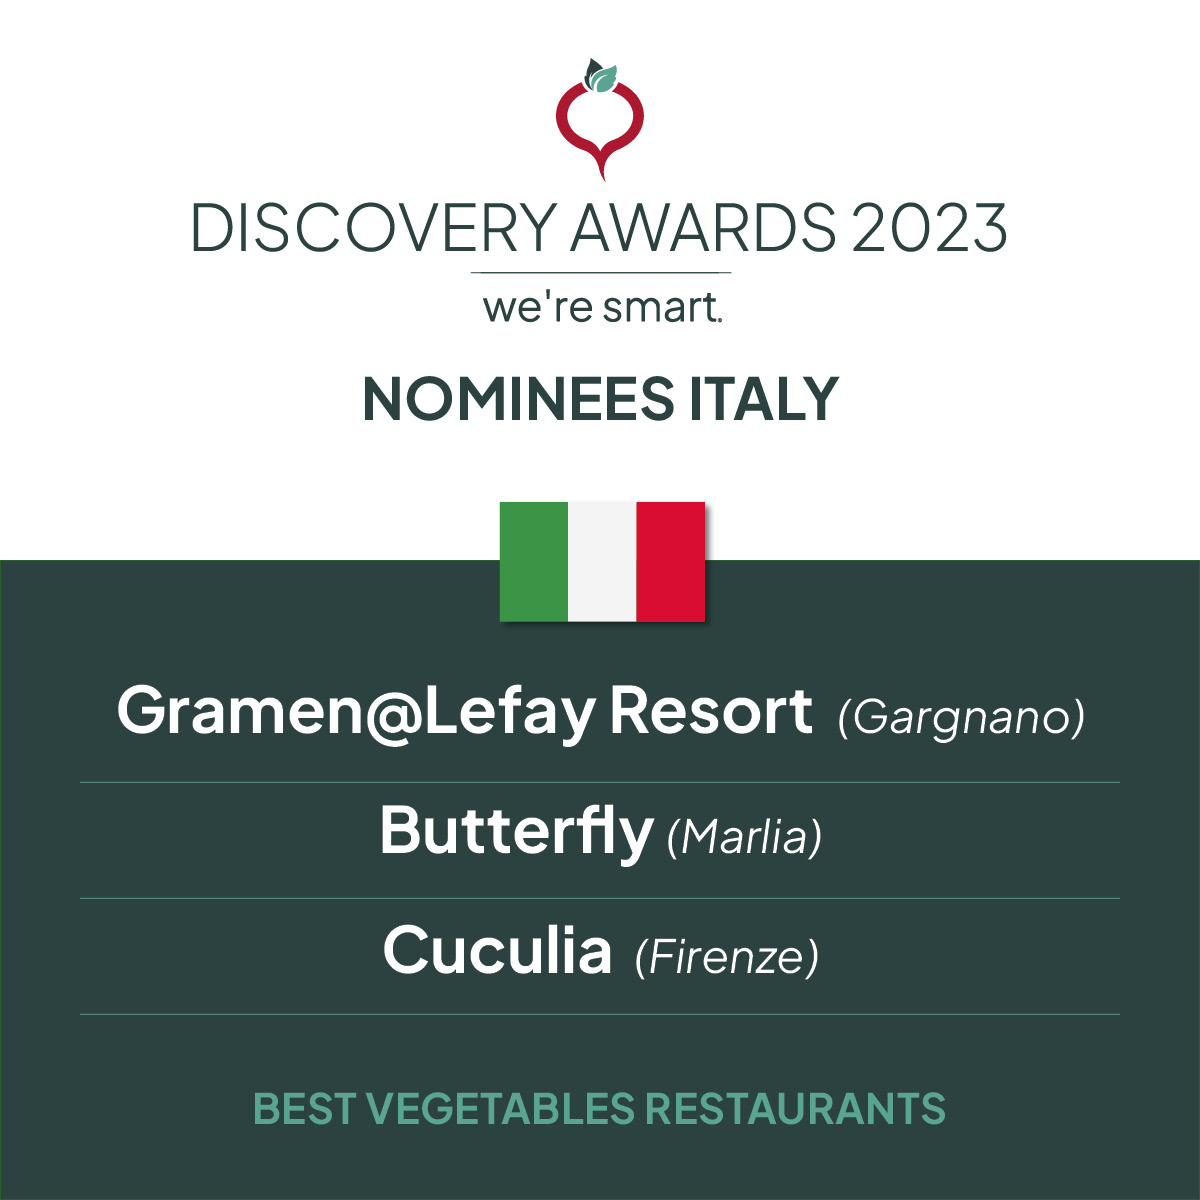 Nominees Italy